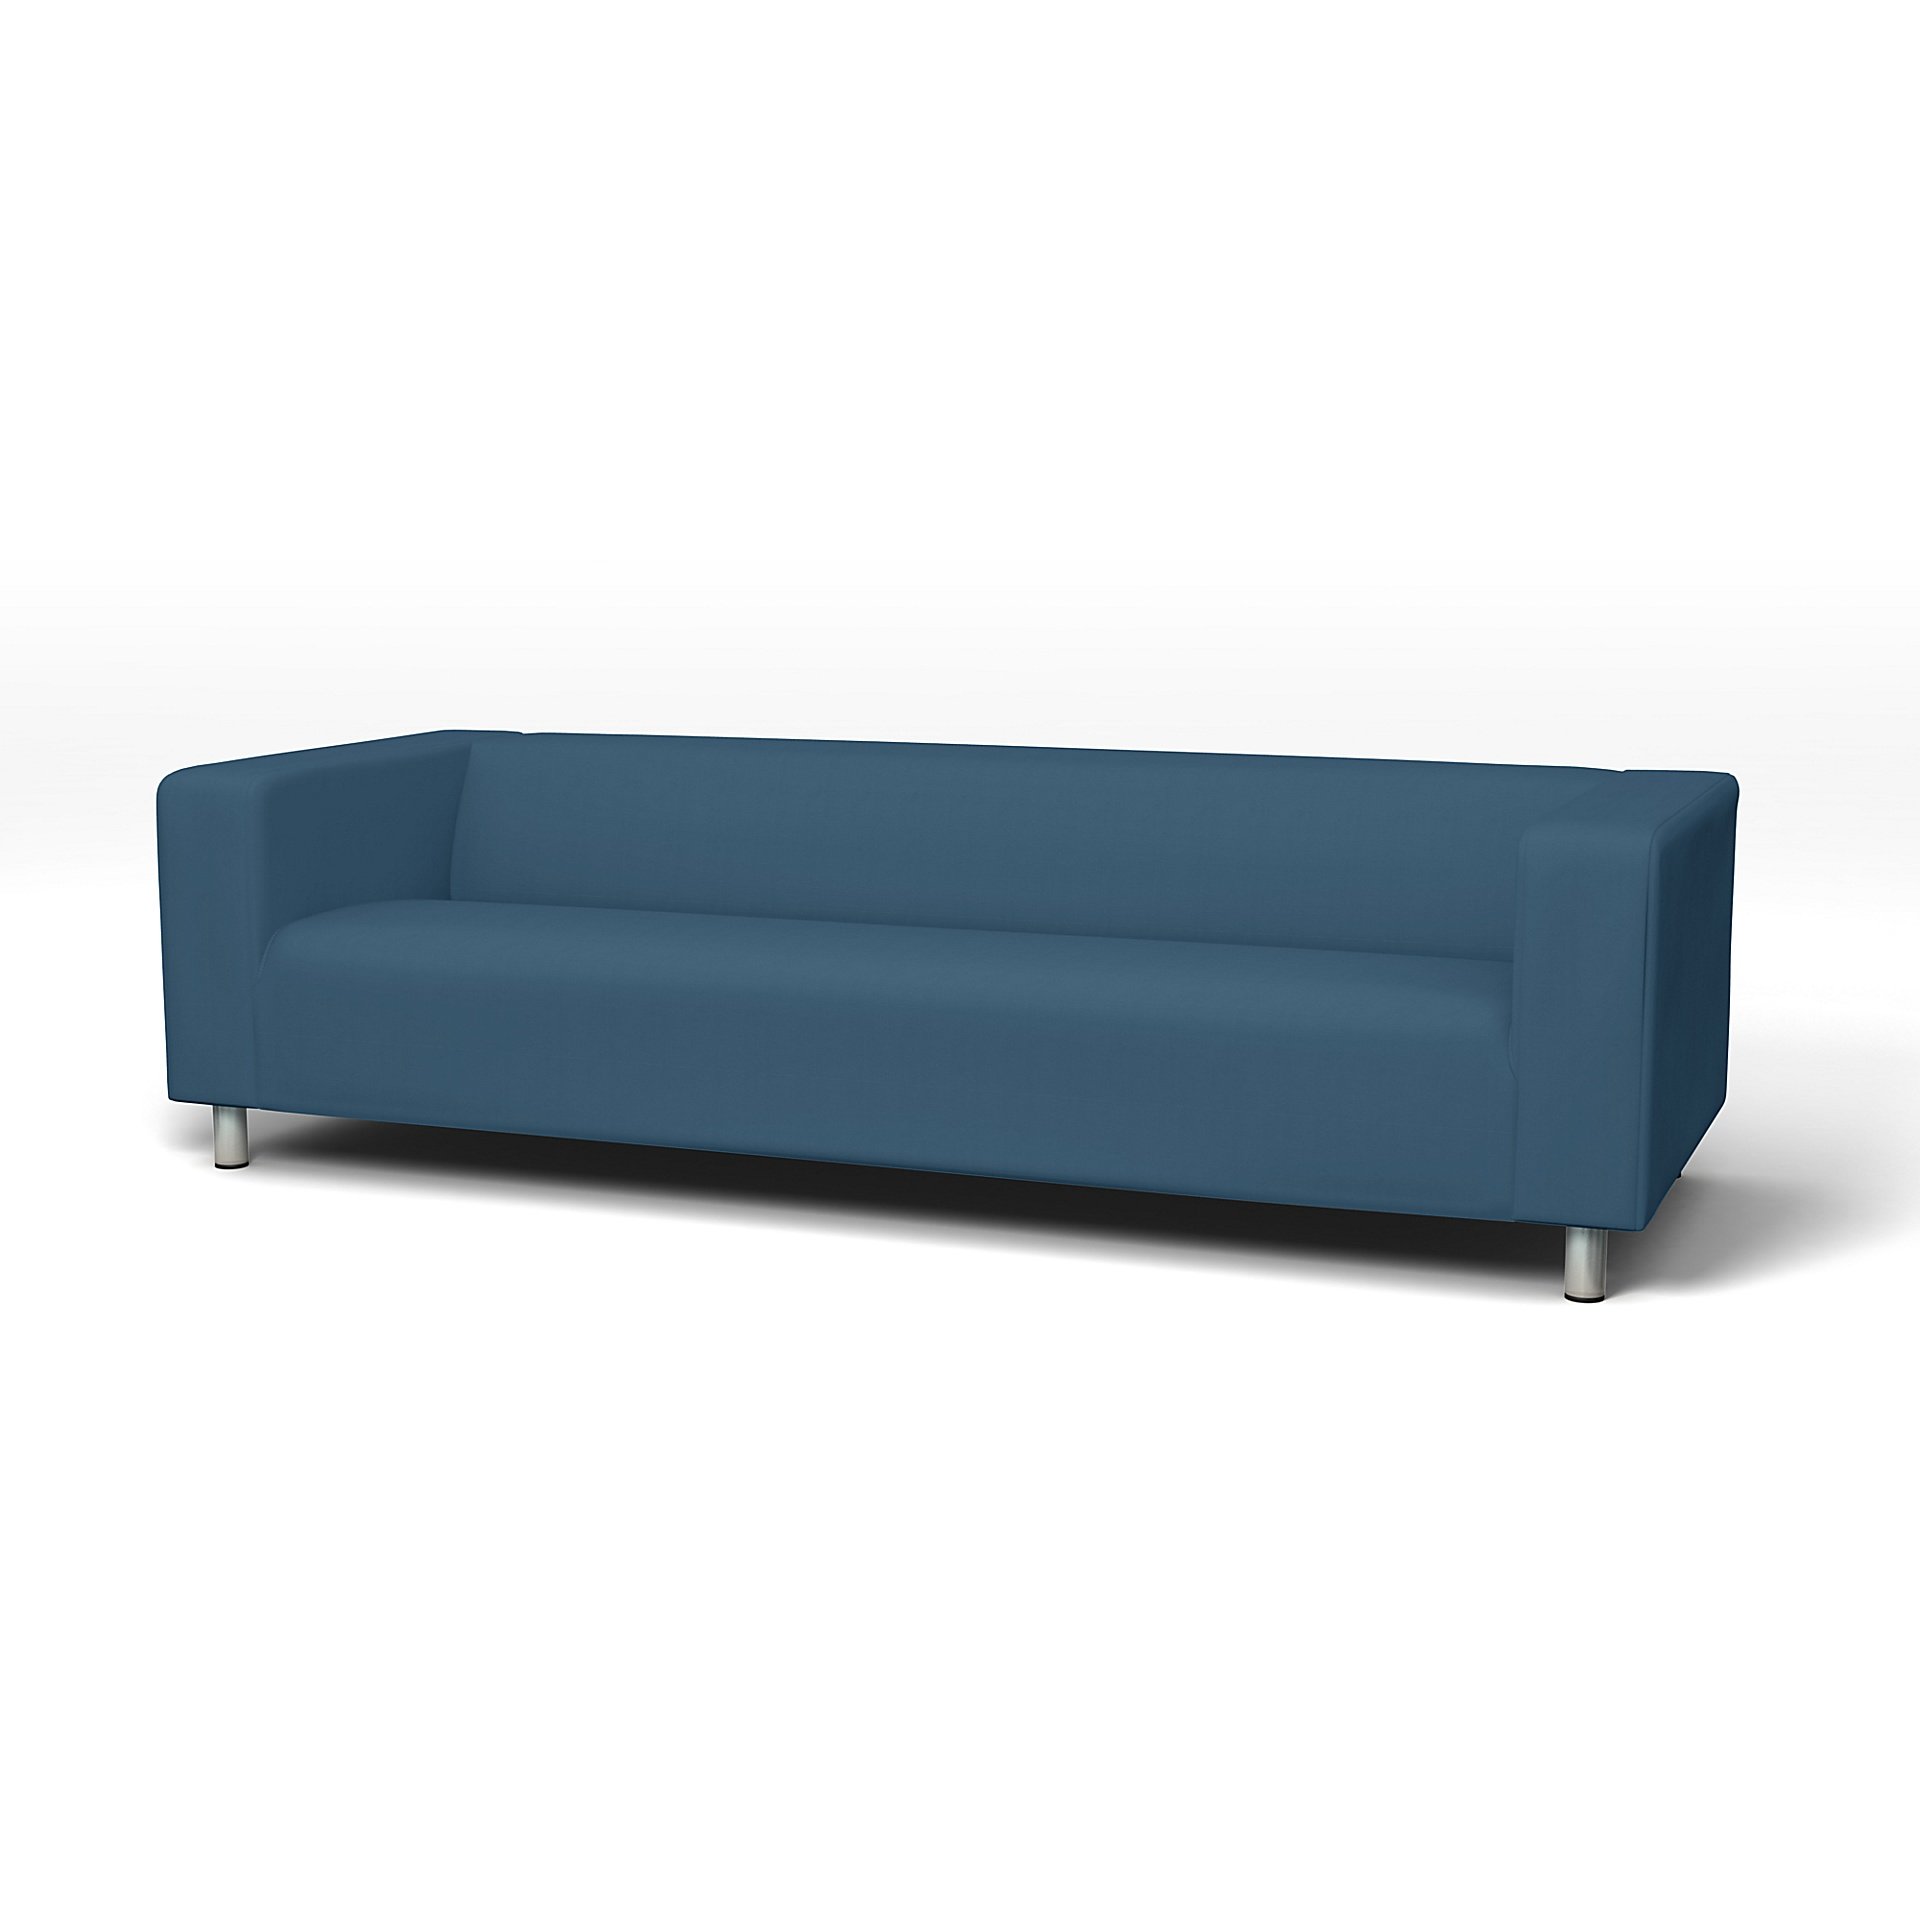 IKEA - Klippan 4 Seater Sofa Cover, Real Teal, Cotton - Bemz